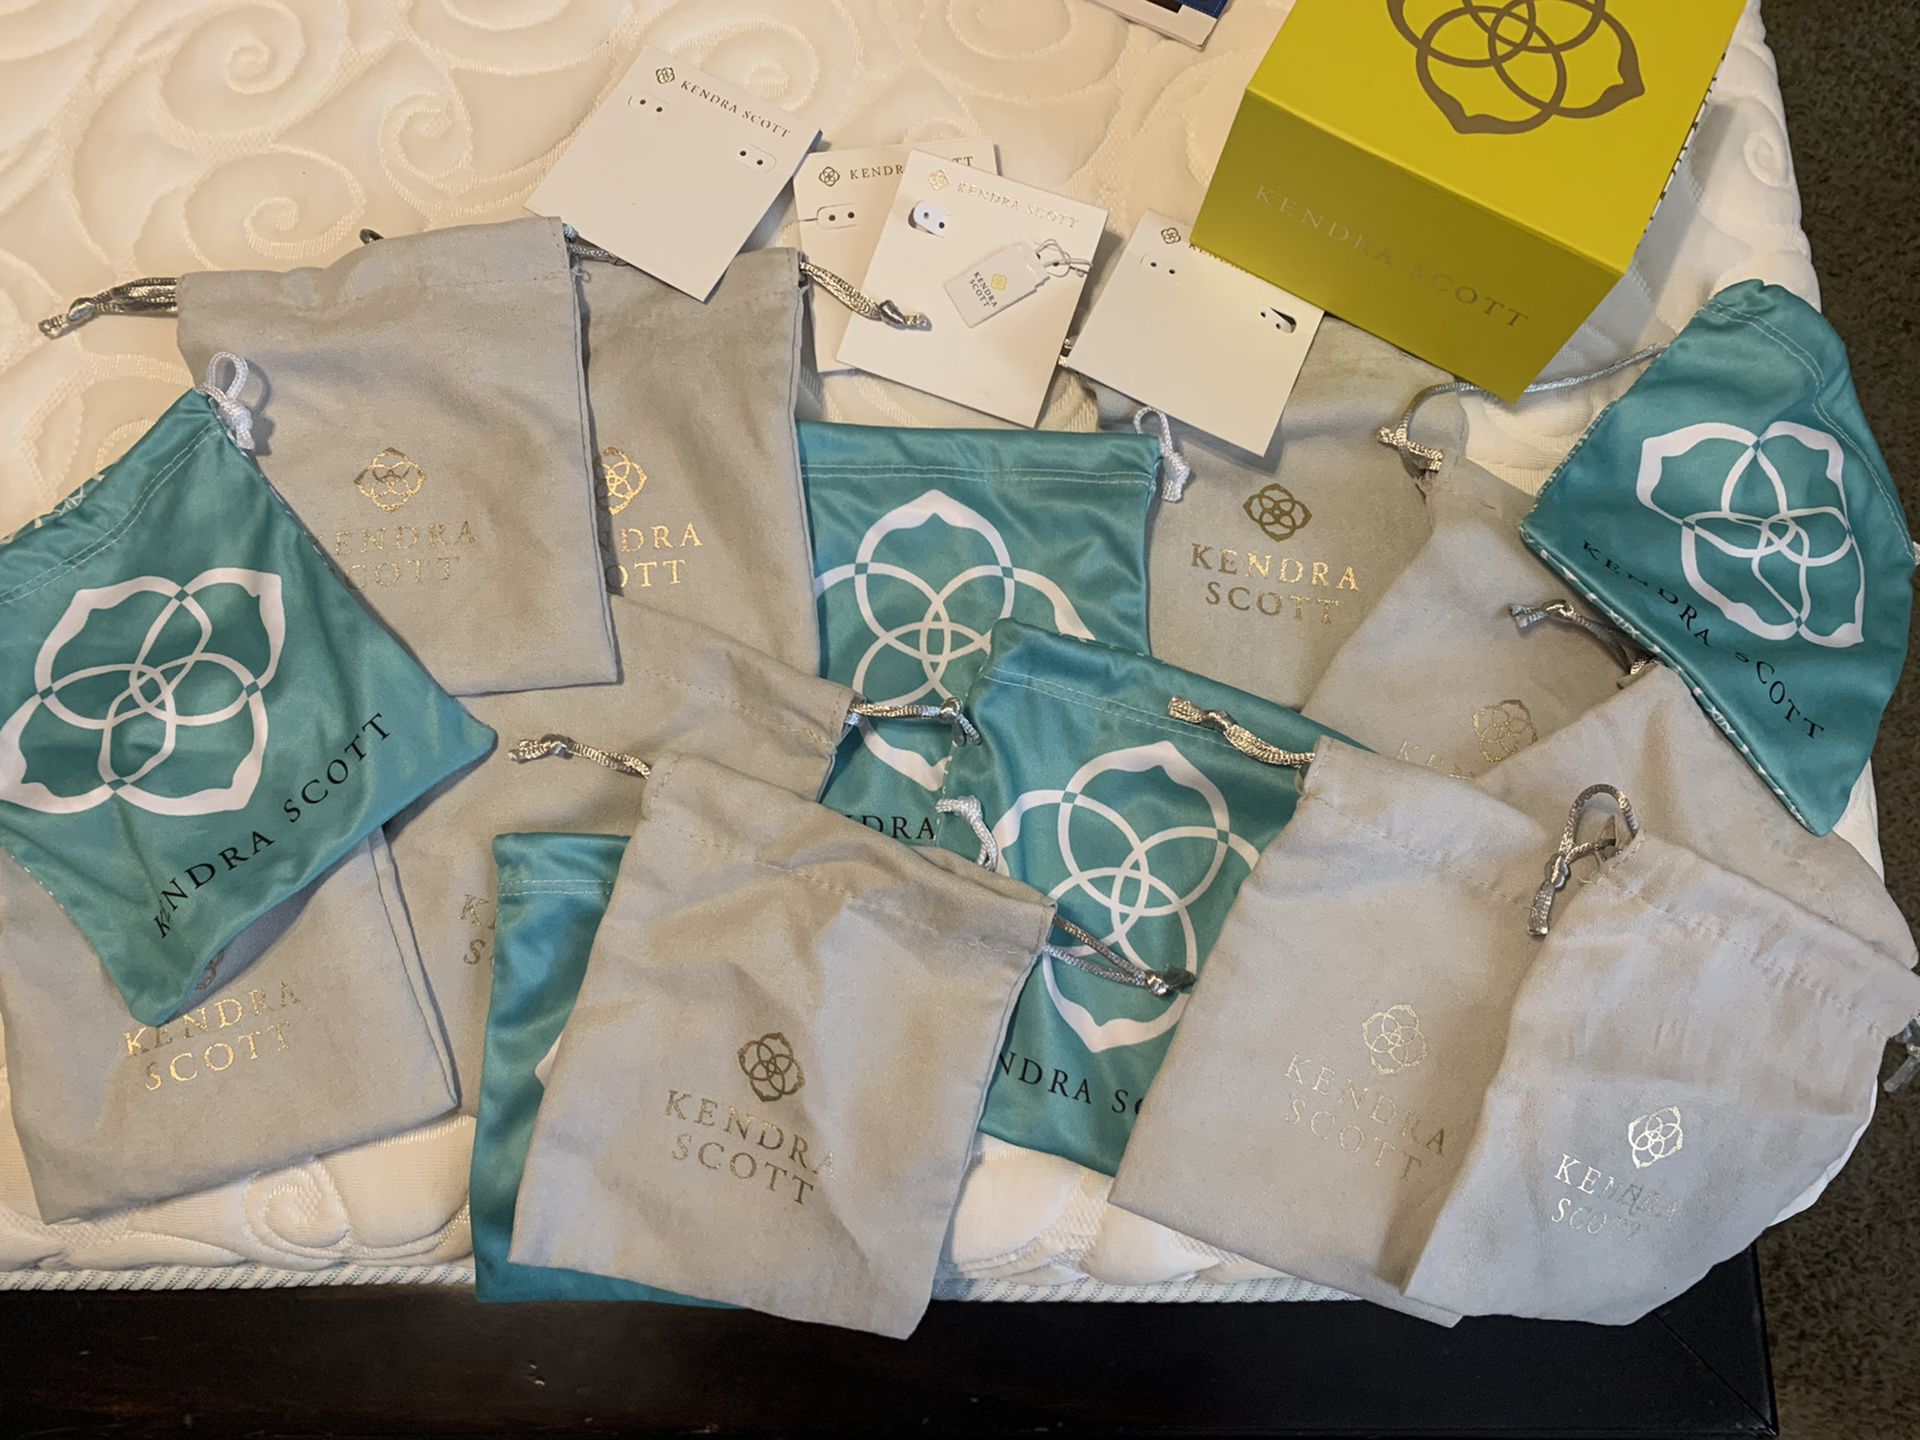 Misc bags / packaging Kendra Scott